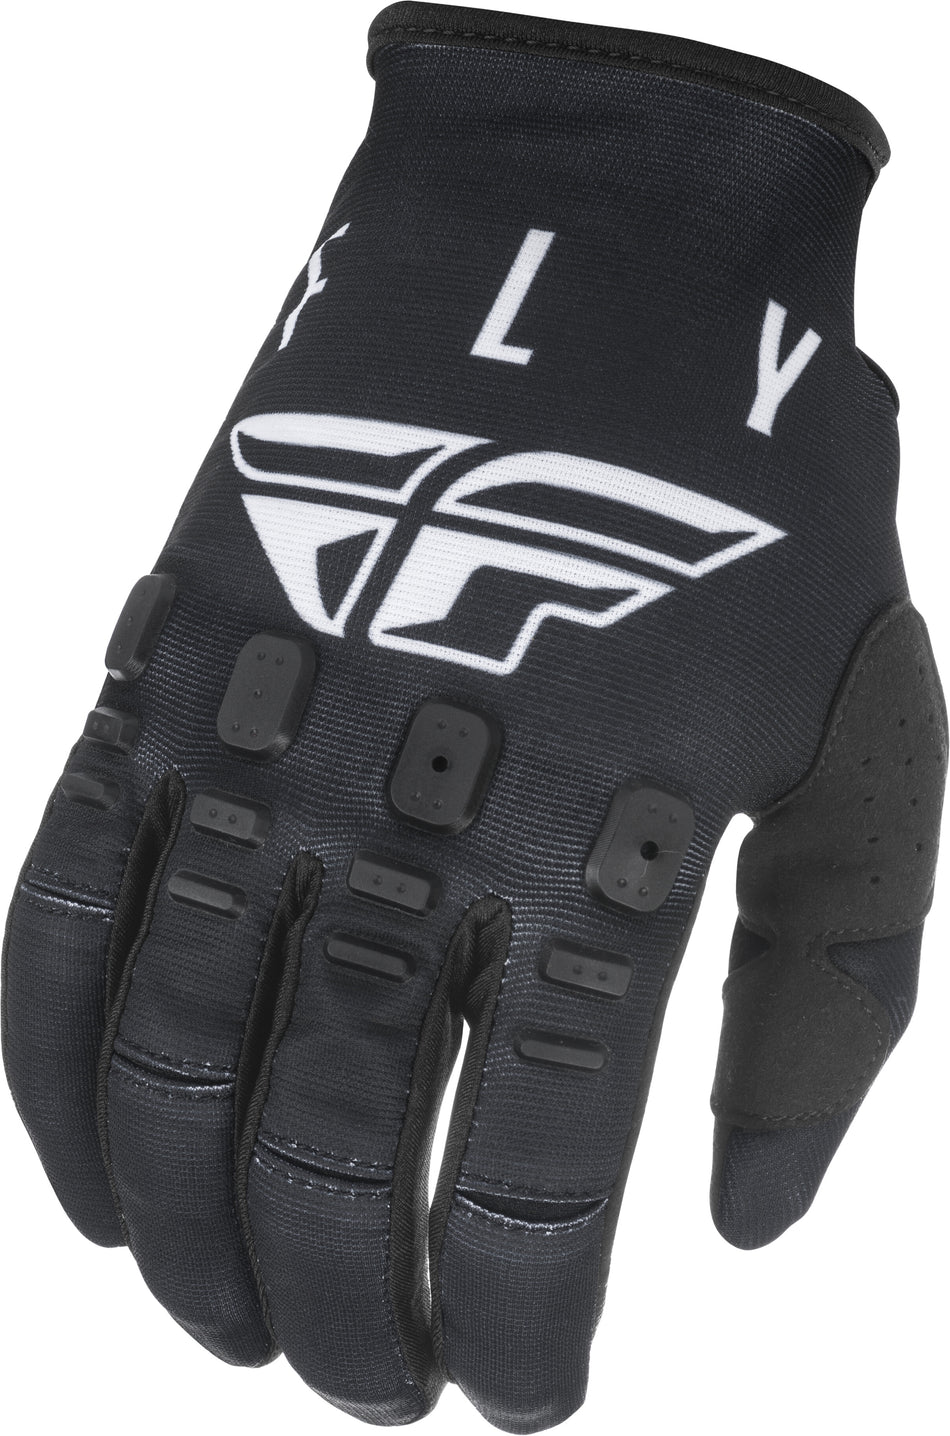 FLY RACING Kinetic K121 Gloves Black/White Sz 12 374-41012